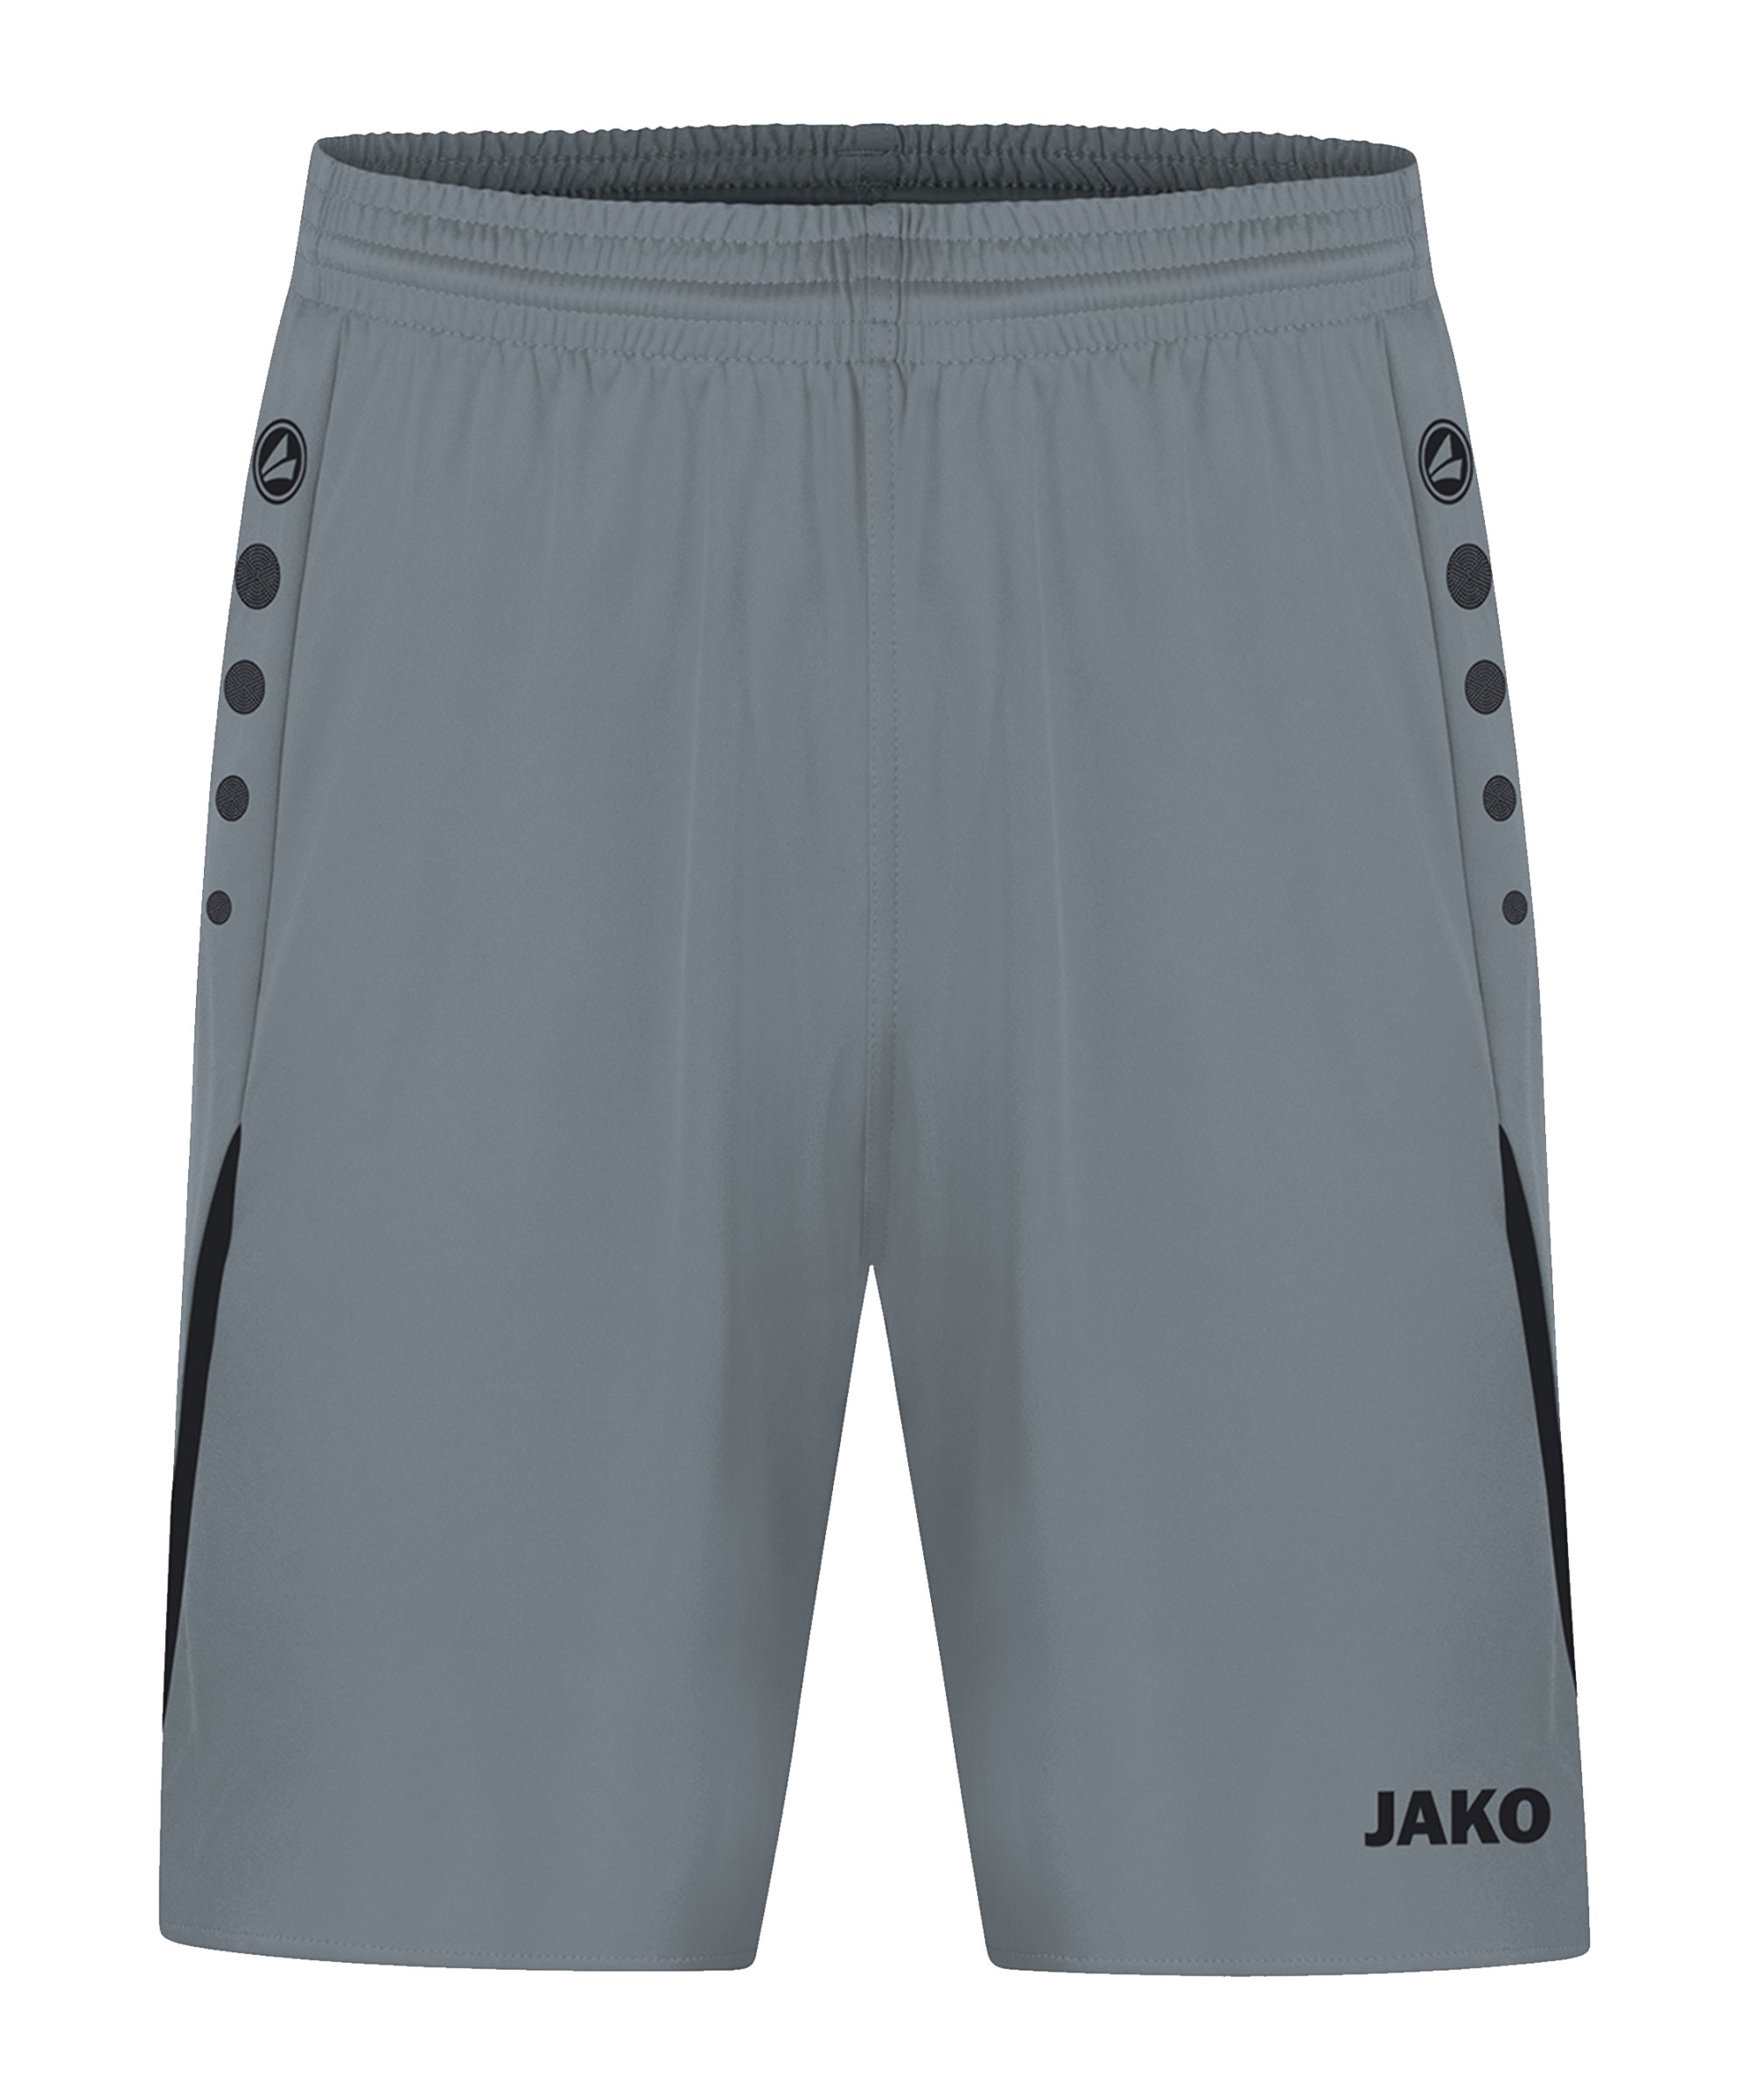 JAKO Challenge Short Damen Grau Schwarz F841 - grau